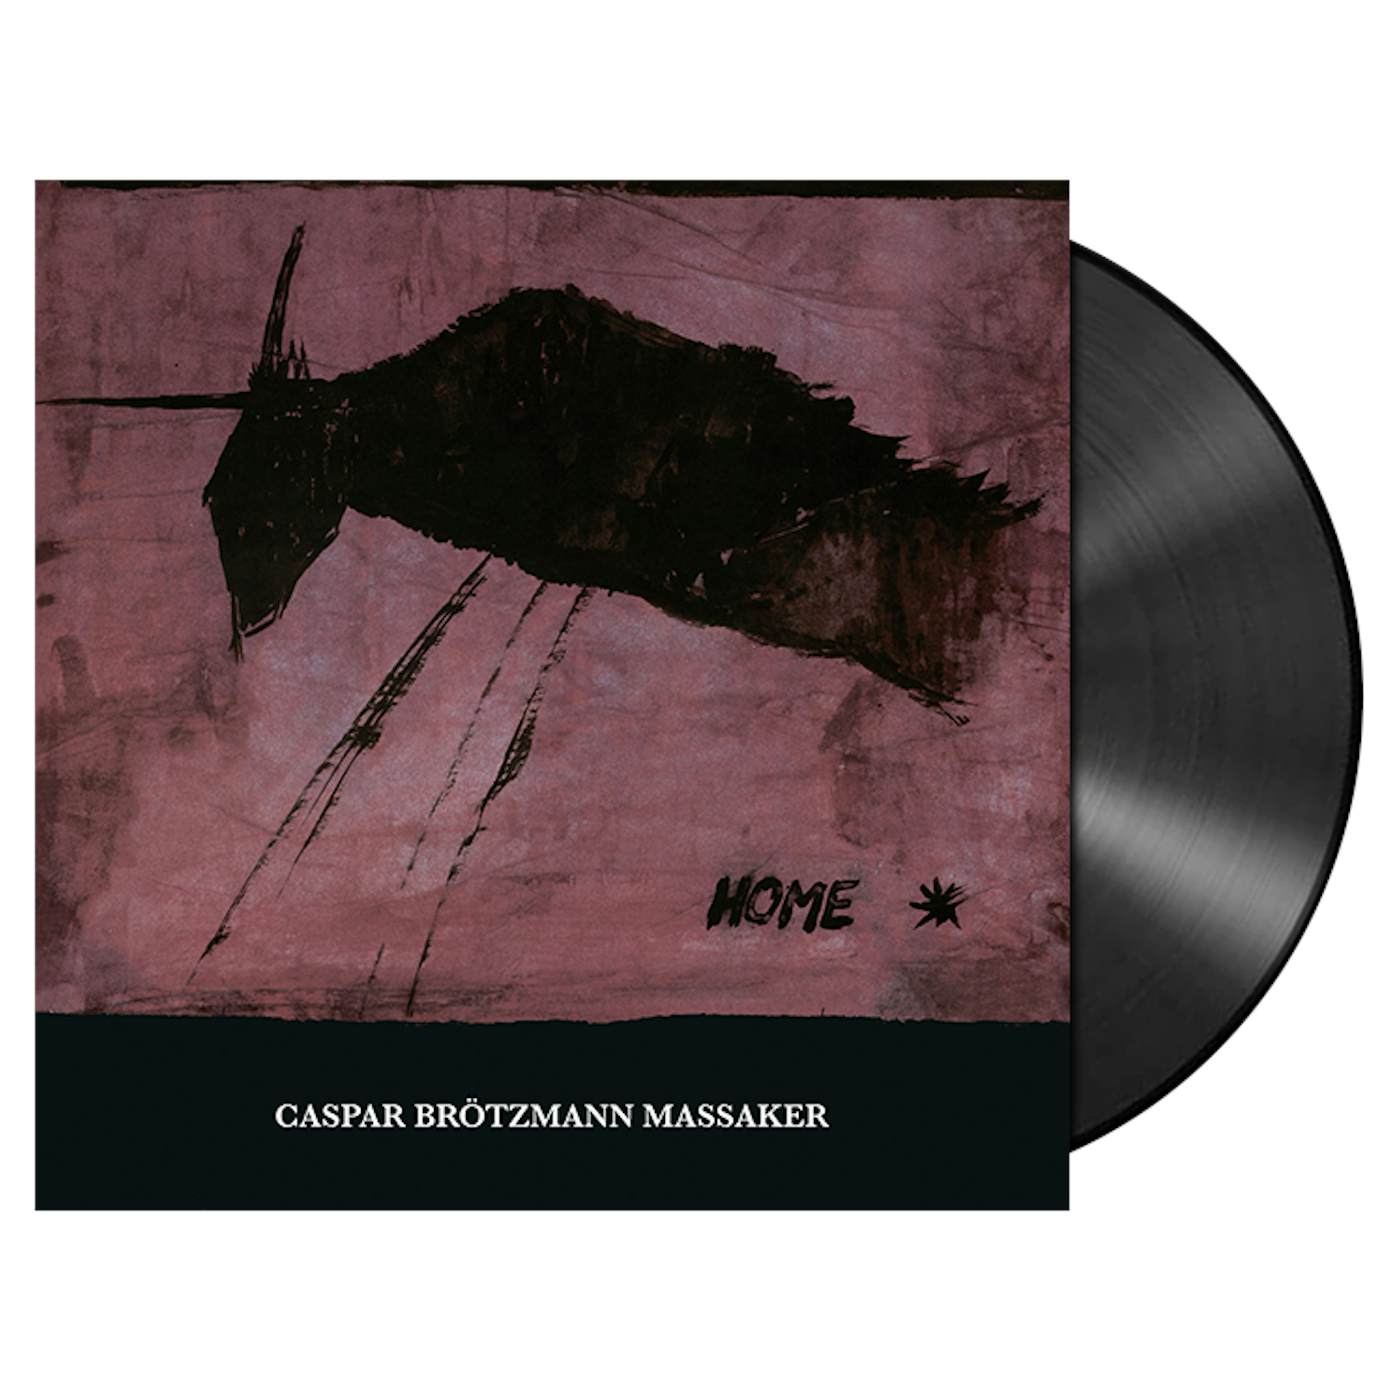 CASPAR BRÖTZMANN MASSAKER - 'Home' LP (Vinyl)